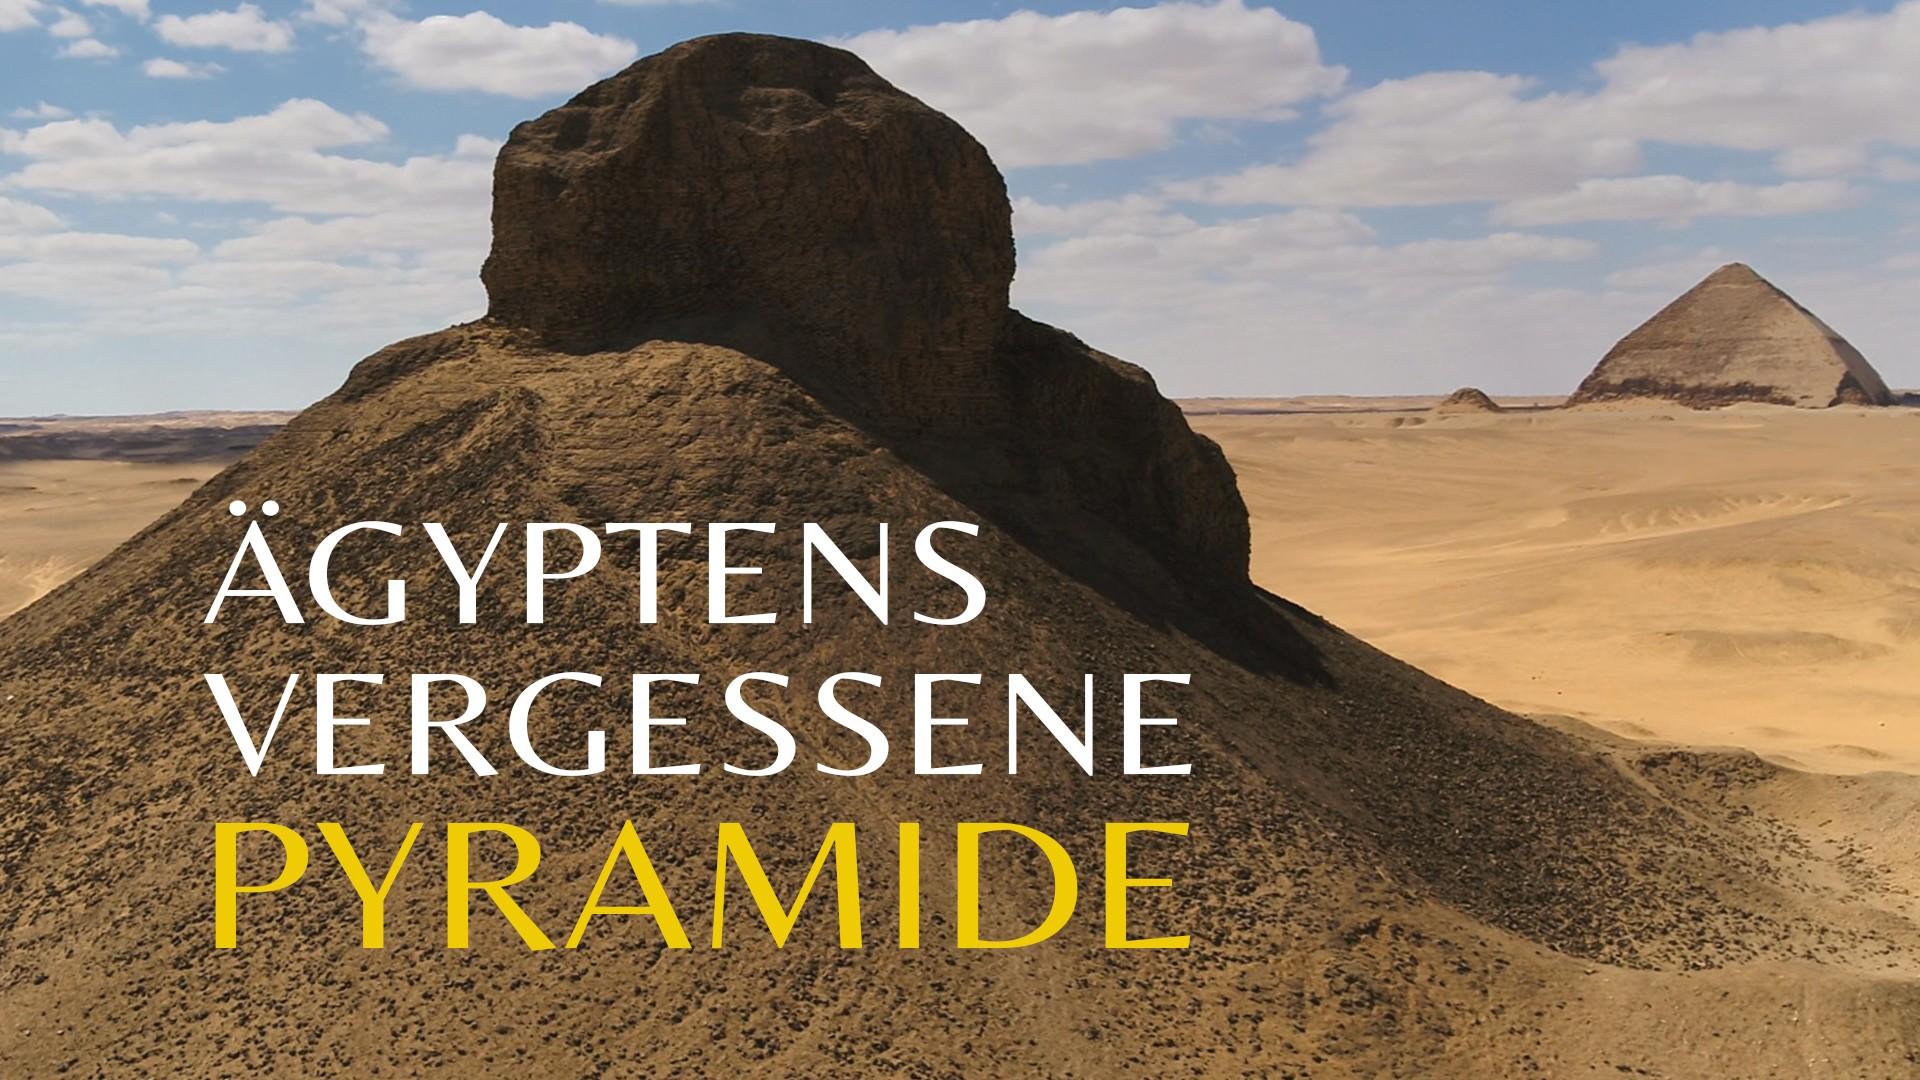 Ägyptens vergessene Pyramide